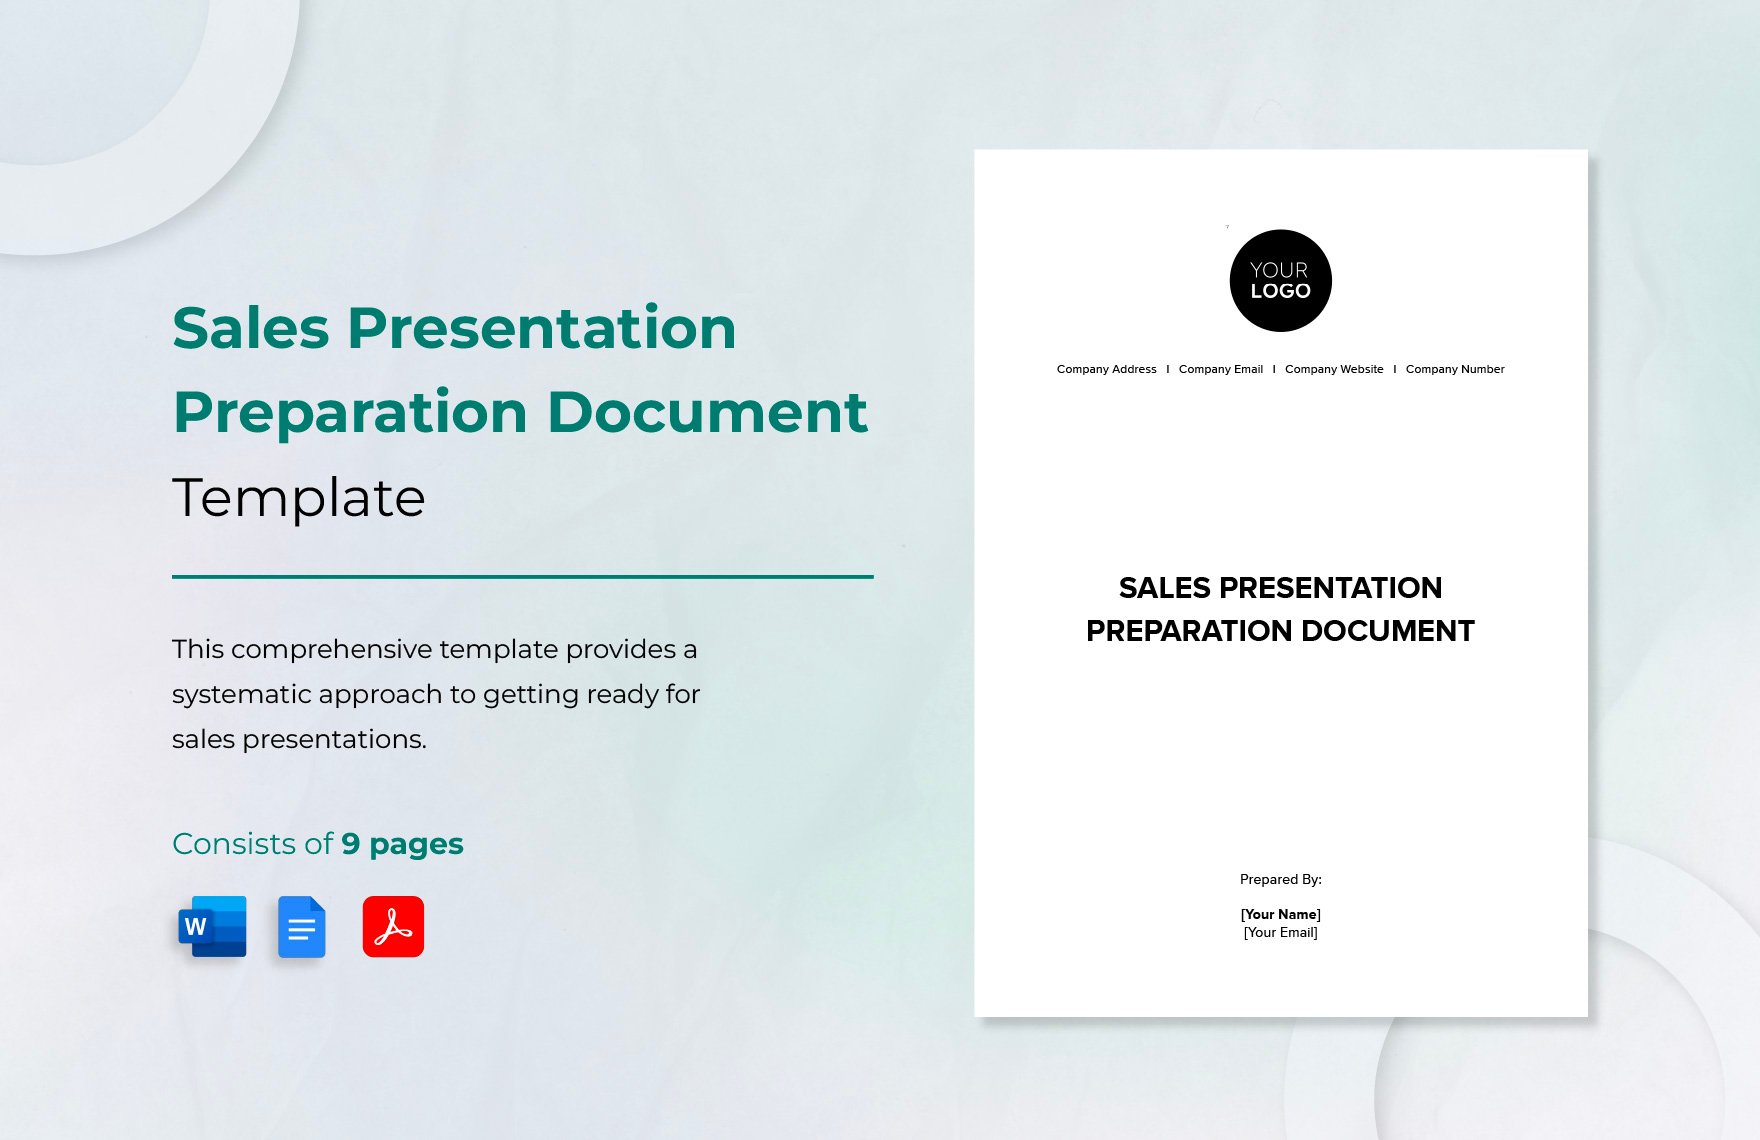 Sales Presentation Preparation Document Template in Word, Google Docs, PDF